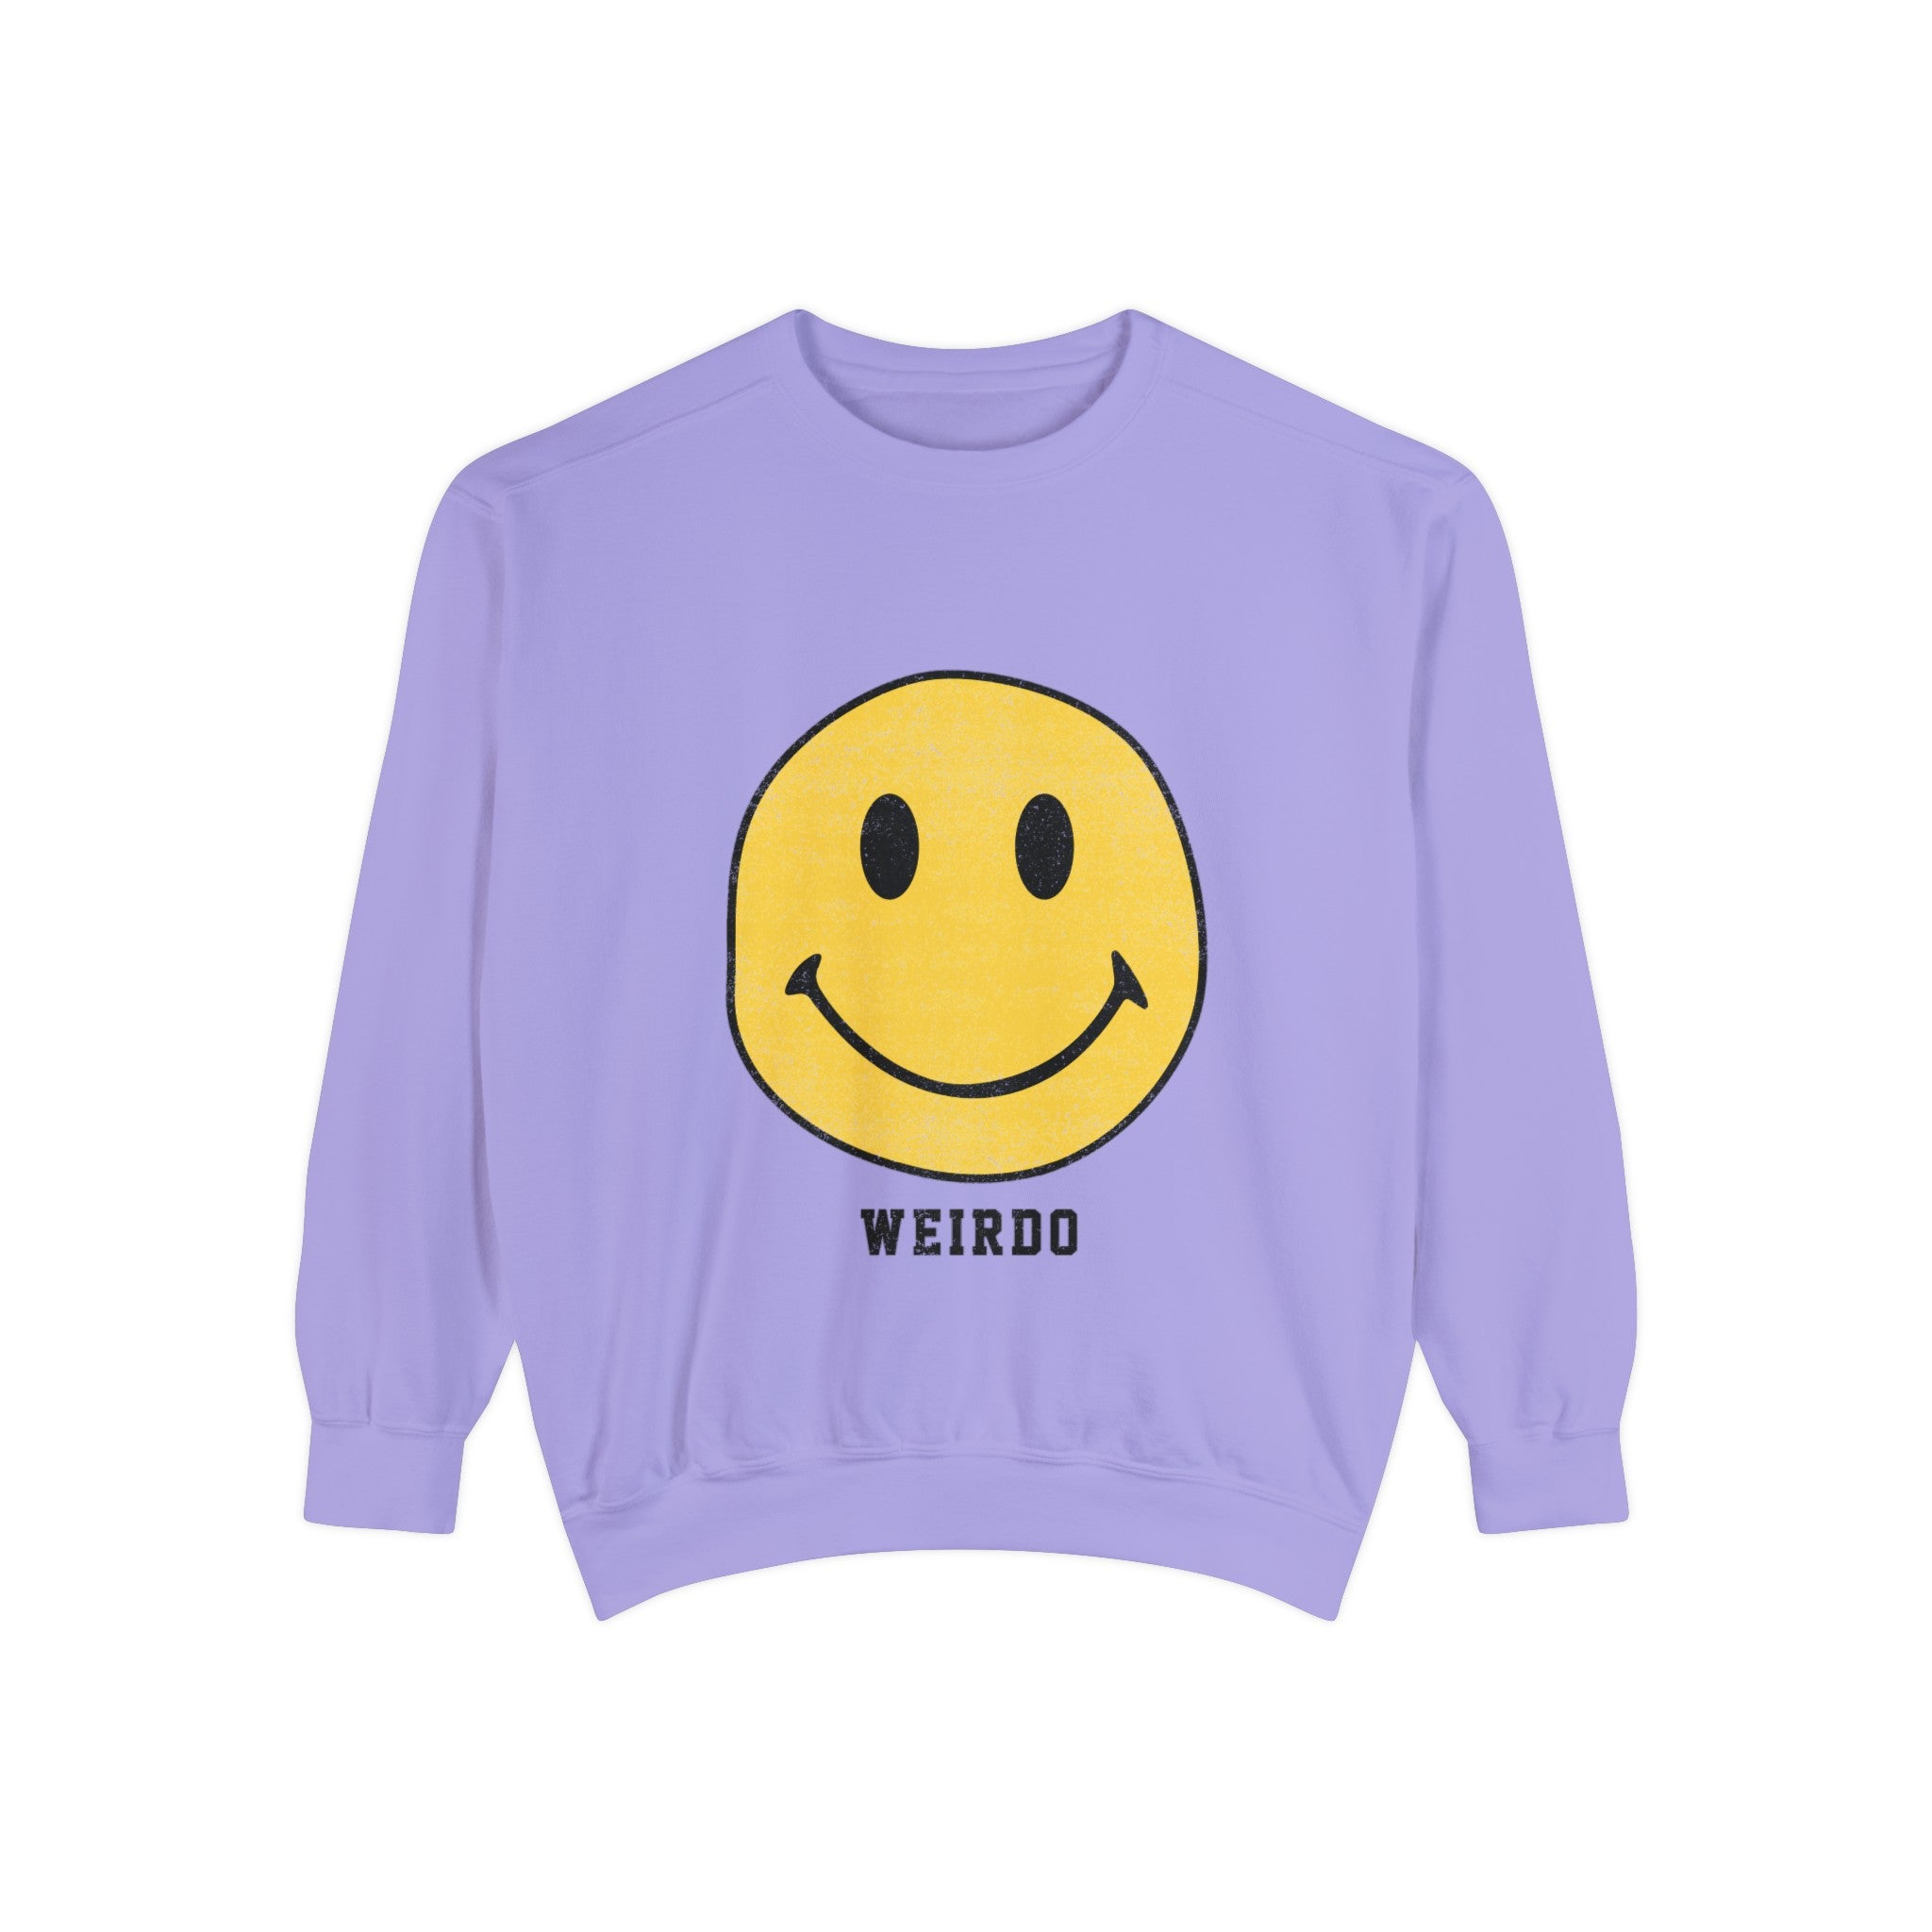 Weirdo Smiley Garment-Dyed Sweatshirt